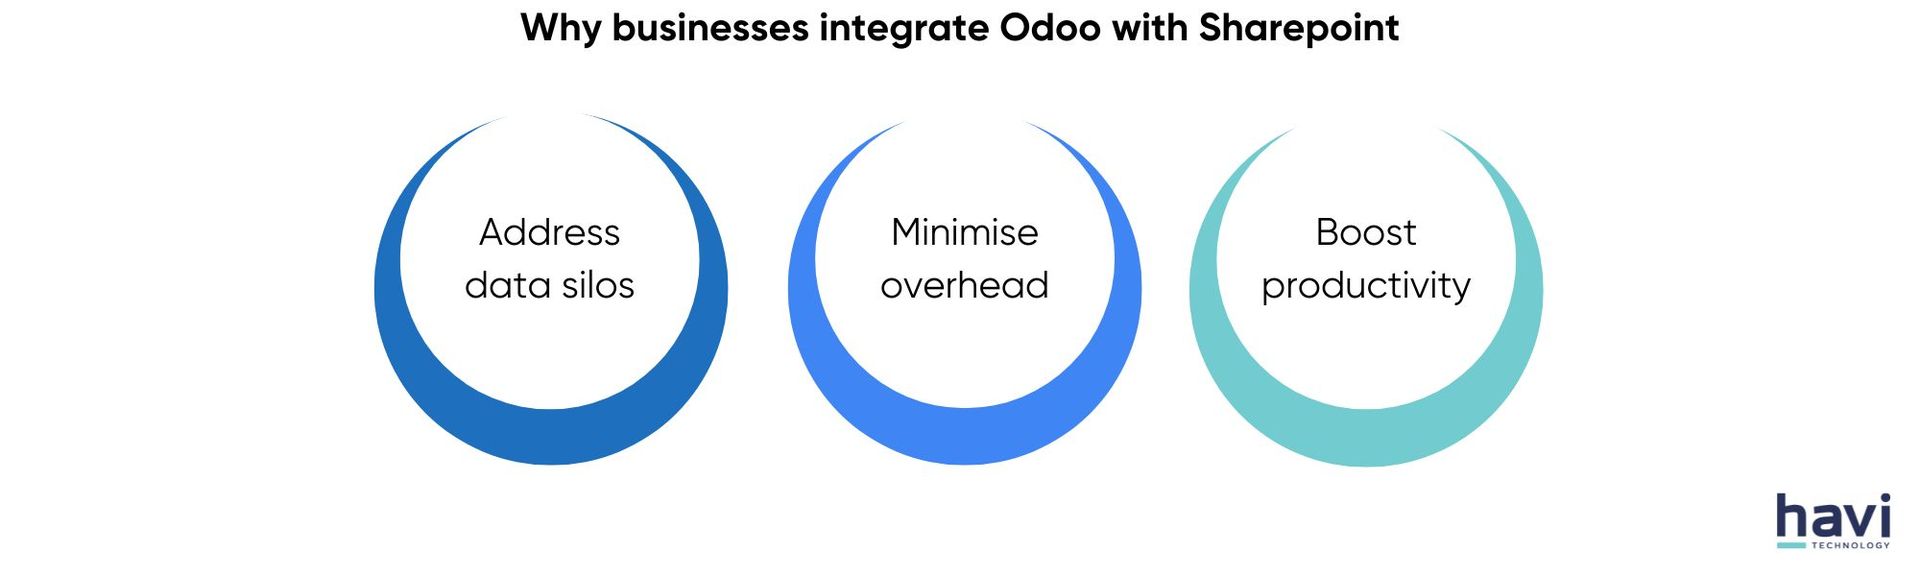 odoo sharepoint integration Havi Technology Pty Ltd